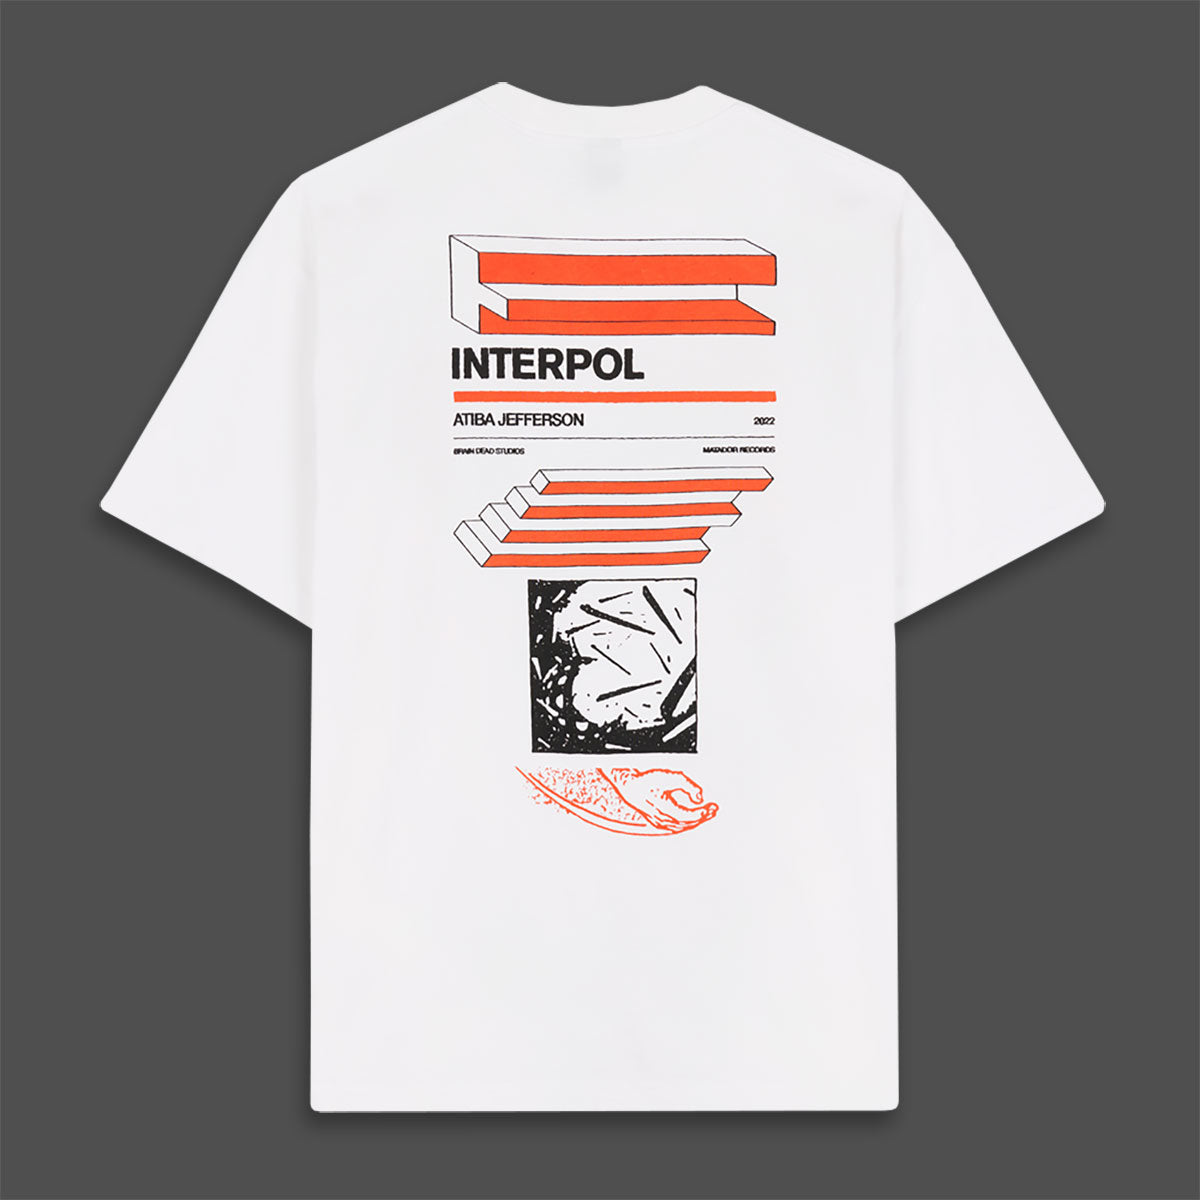 Interpol x Brain Dead x Atiba Jefferson Photo #1 T-Shirt